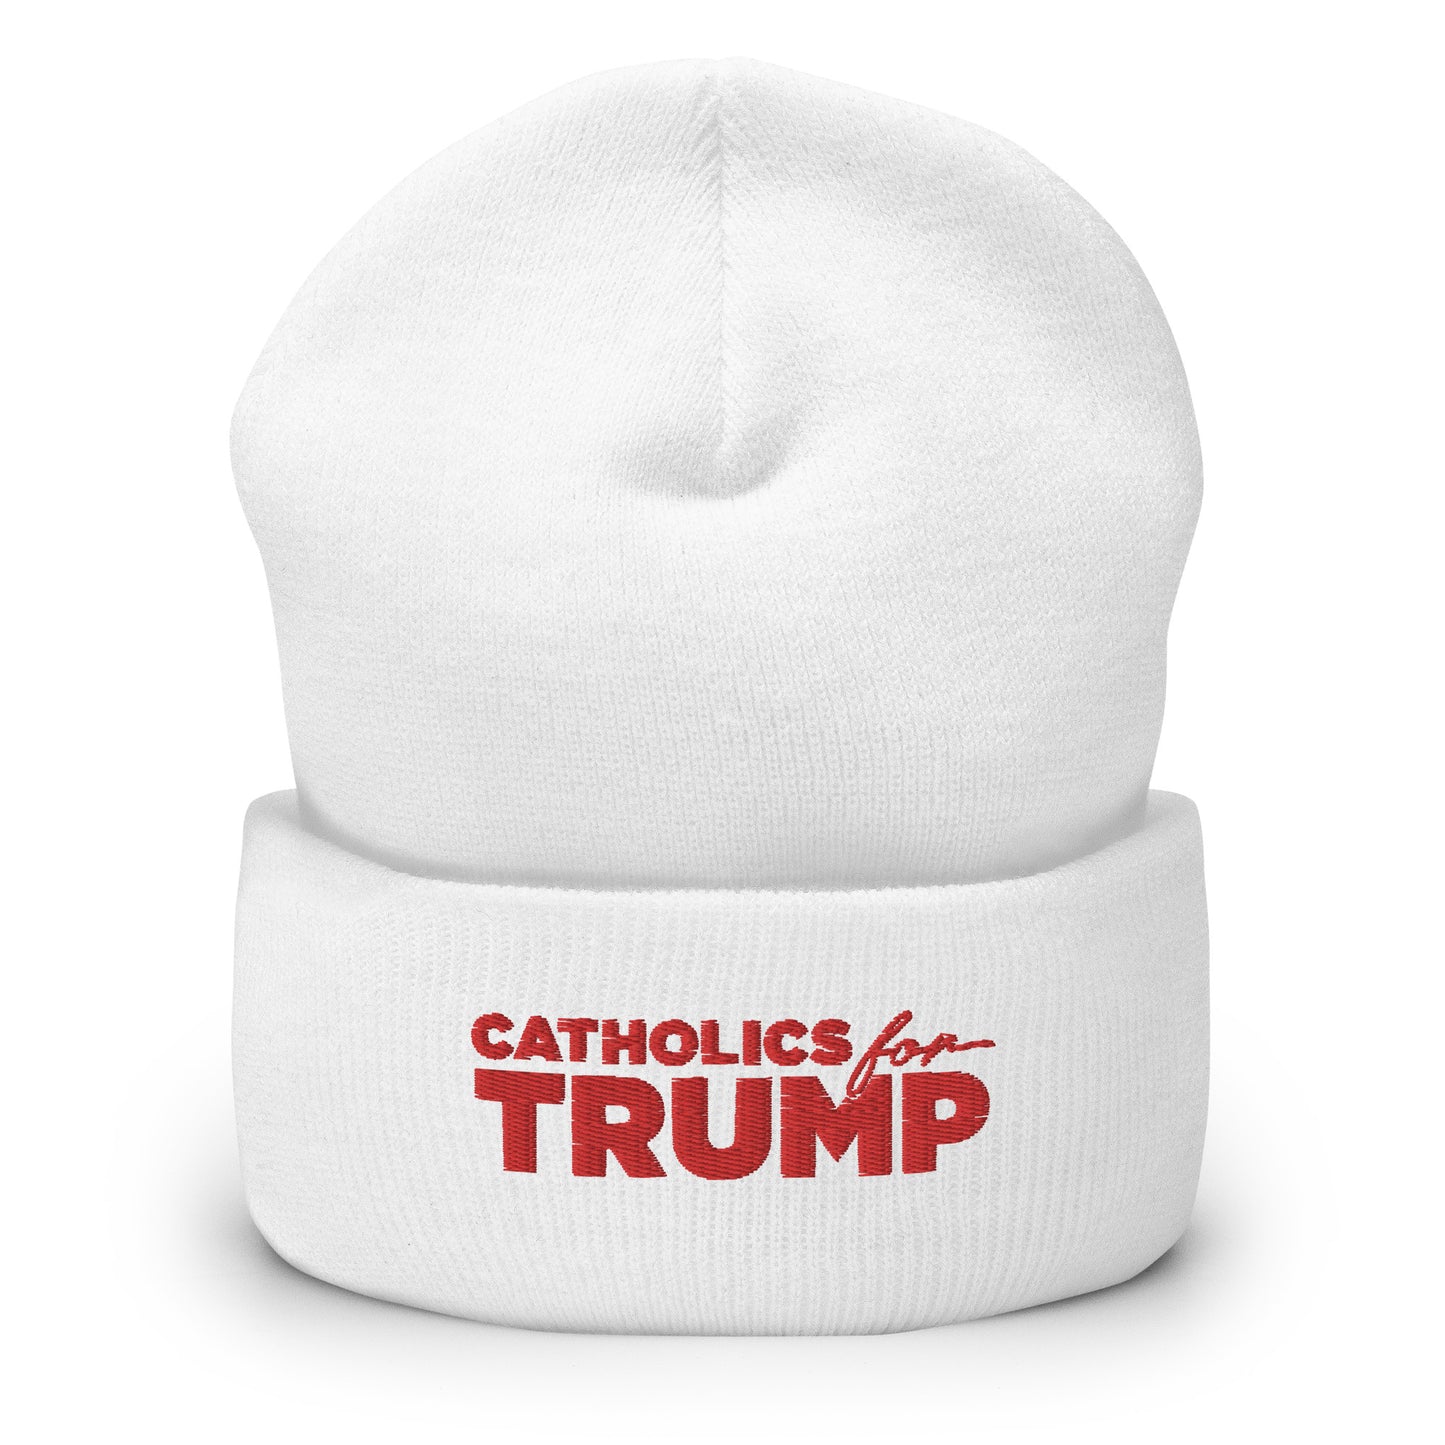 Catholics for Trump Beanie